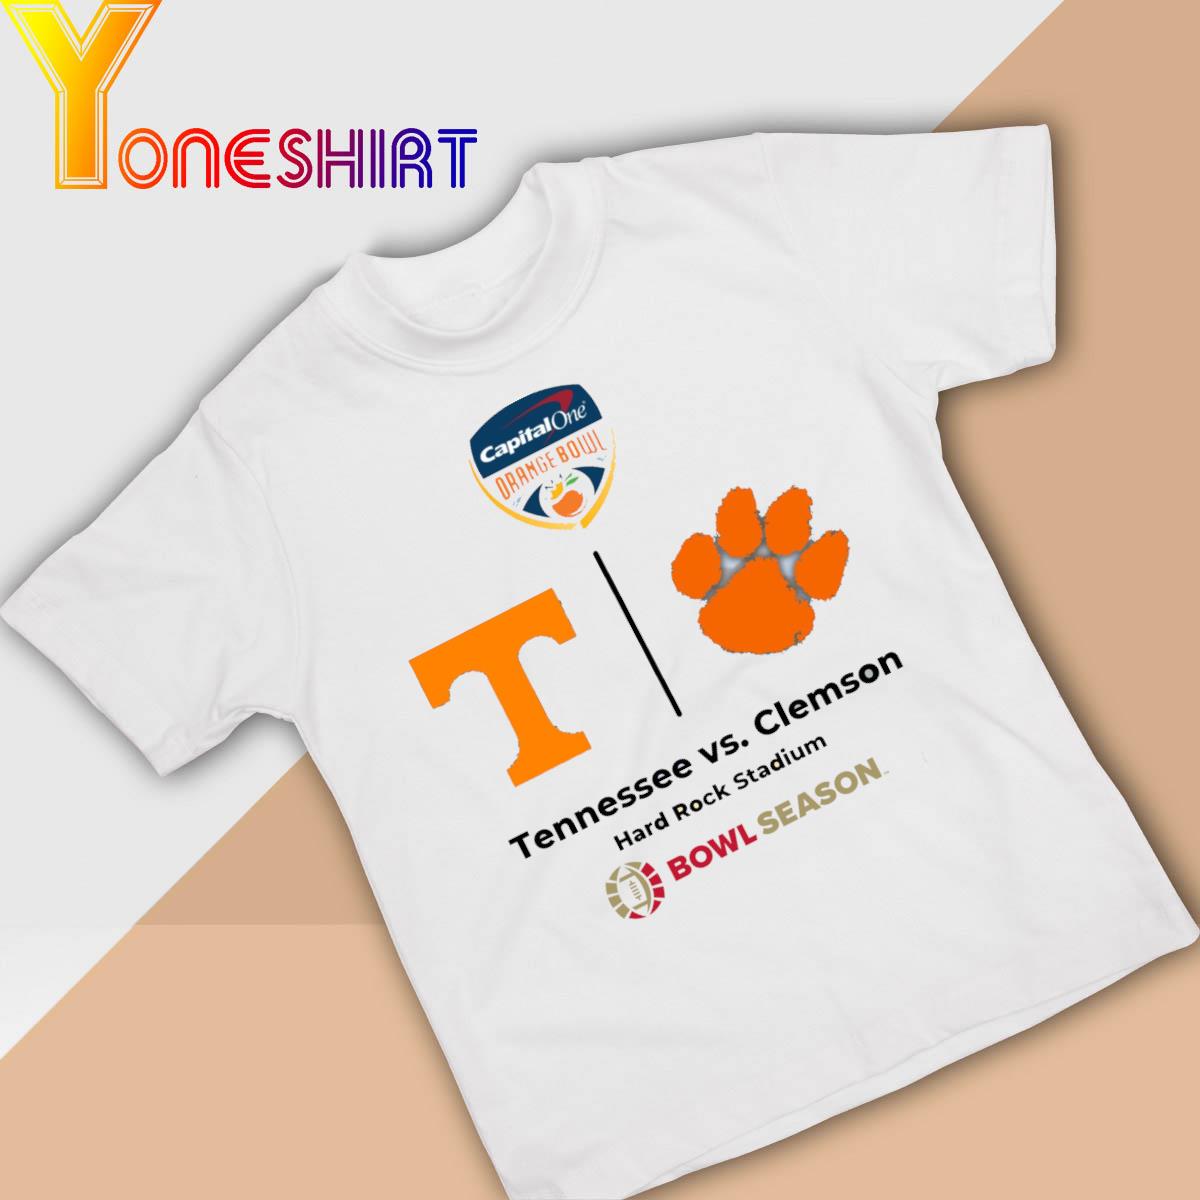 Capital One Orange Bowl Tennessee vs Clemson Hard Rock Stadium shirt